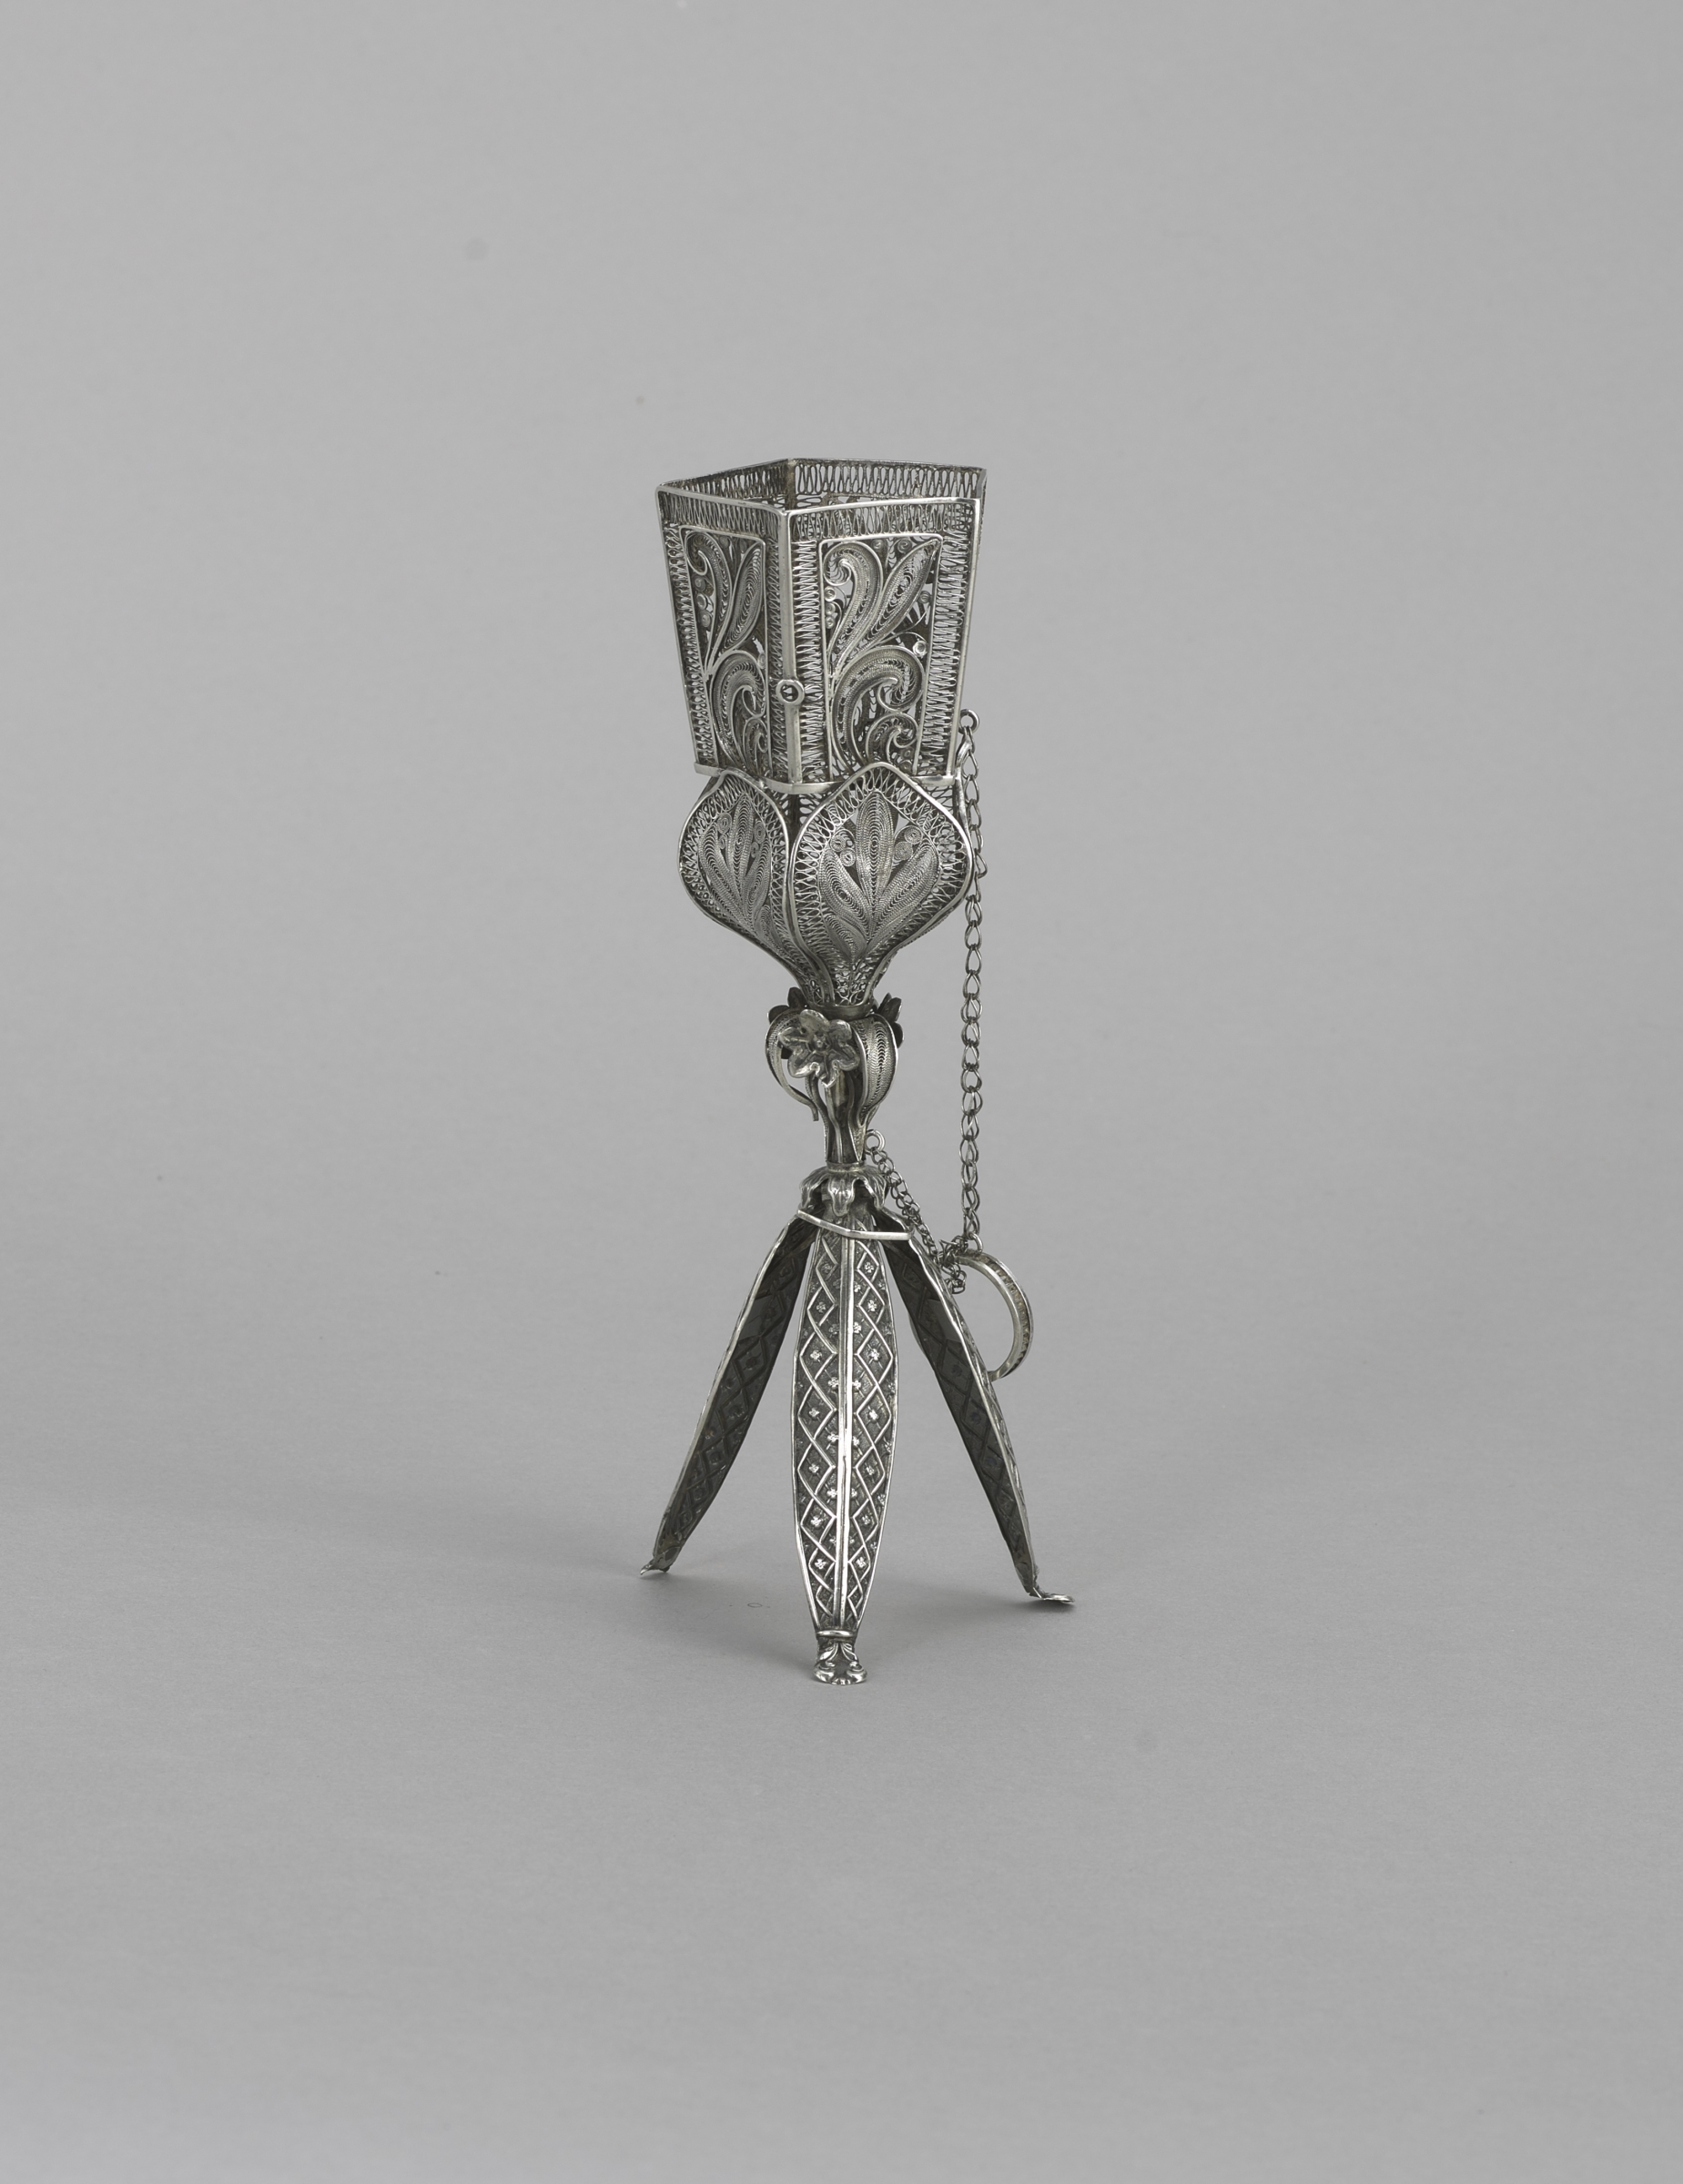 Silver filigree vase with tripod base